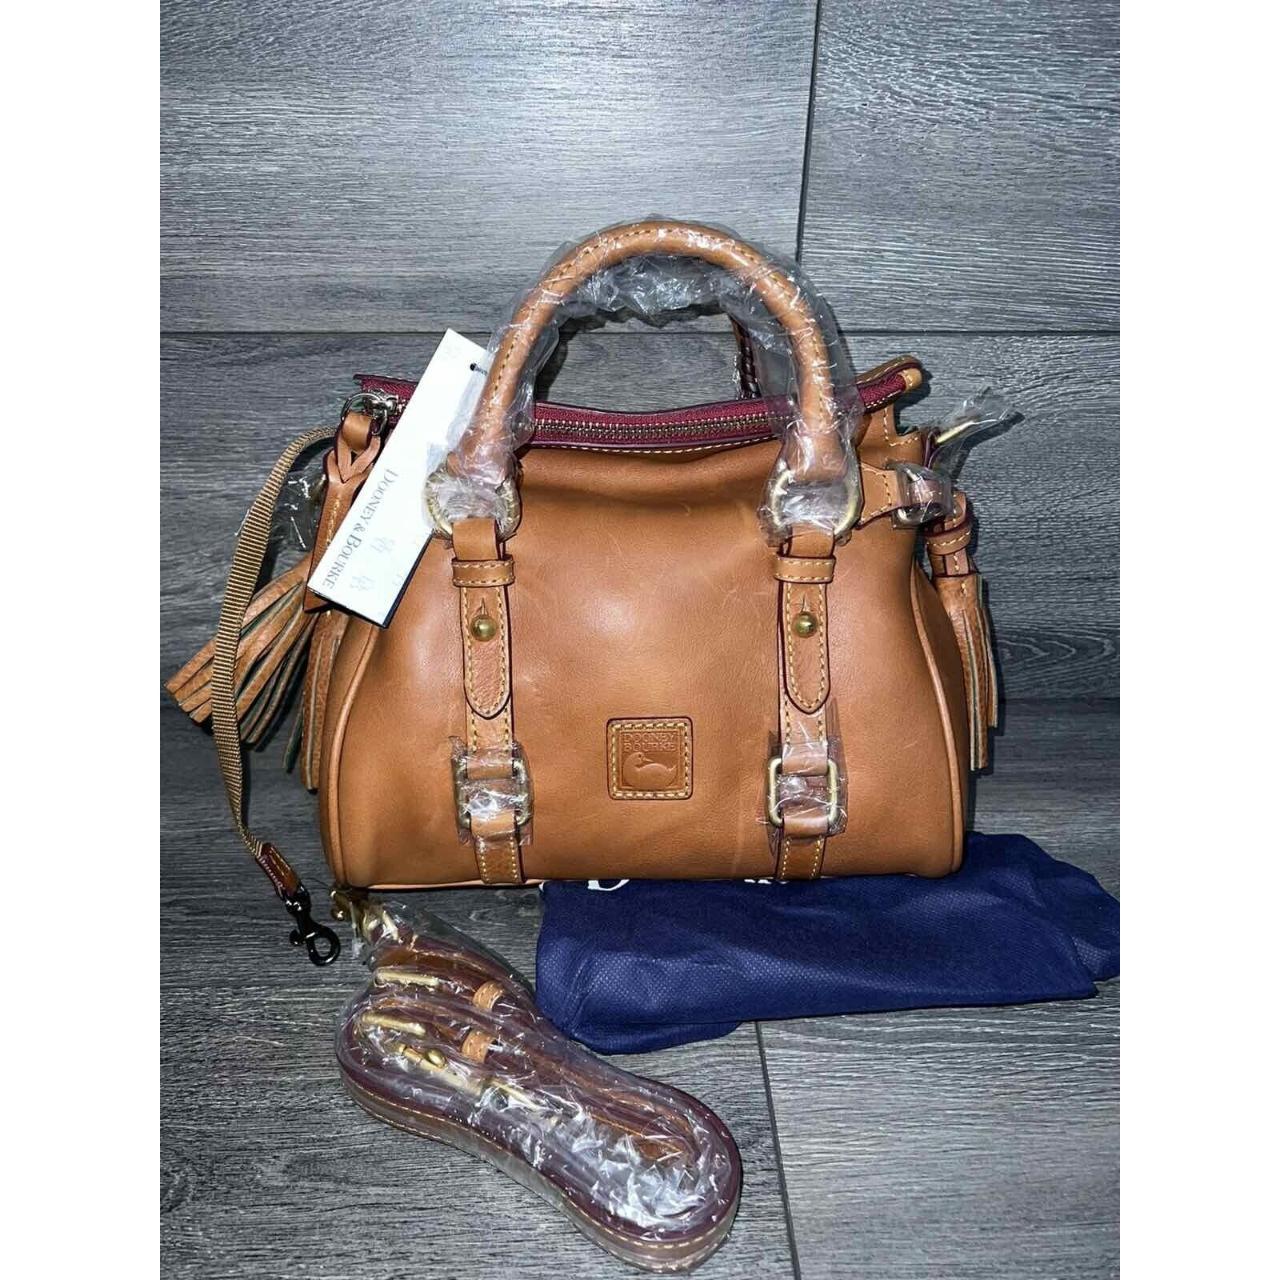 Dooney & Bourke Dooney & Bourke Florentine Mini Bags & Handbags for Women  for sale